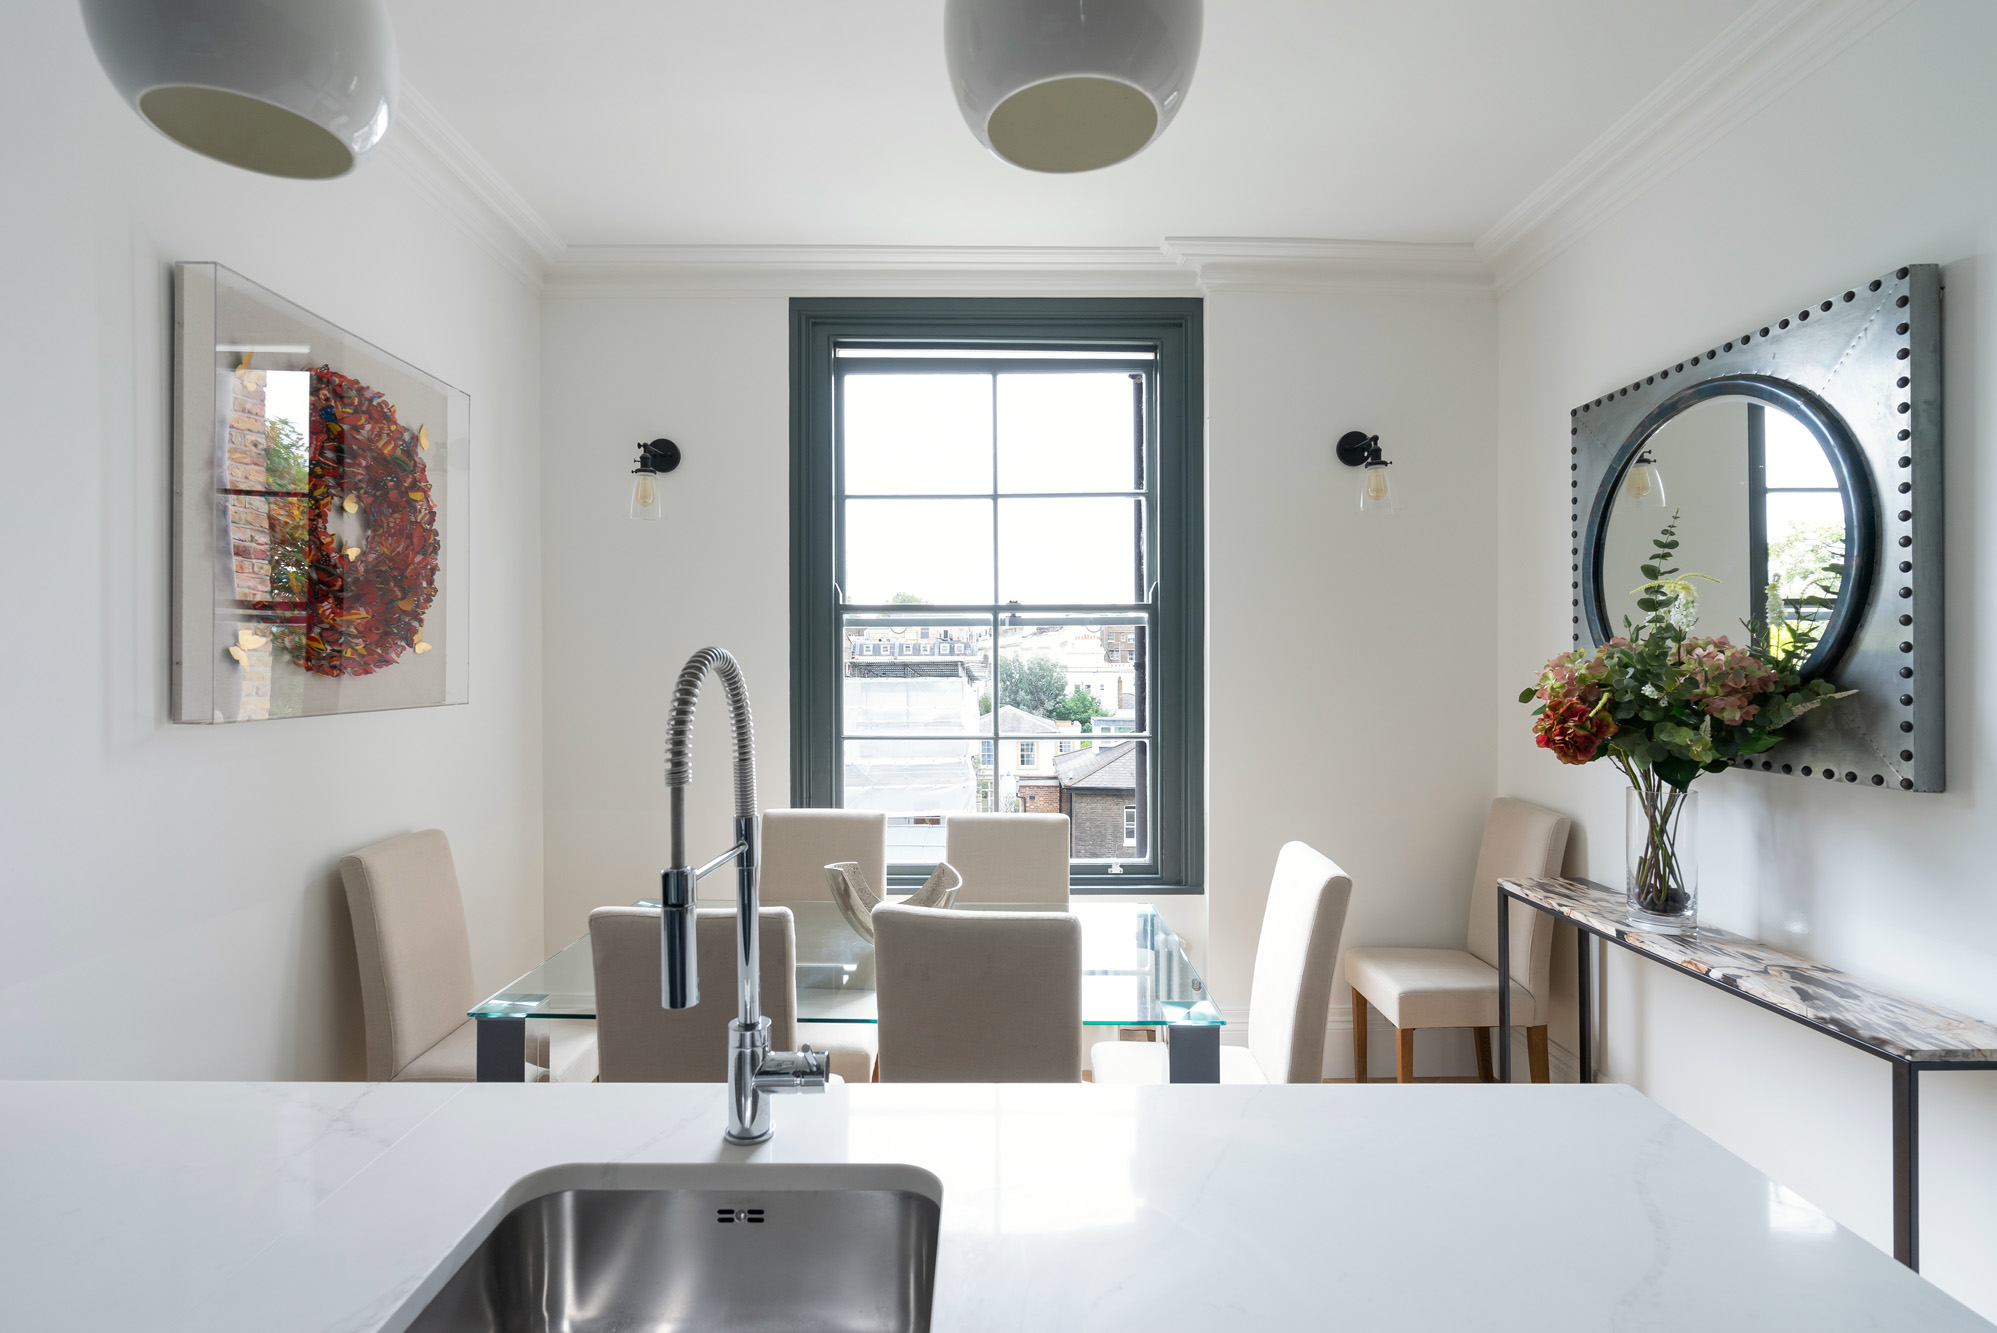 For Sale: Sunderland Terrace Notting Hill W11 modern kitchen with luxury interior design